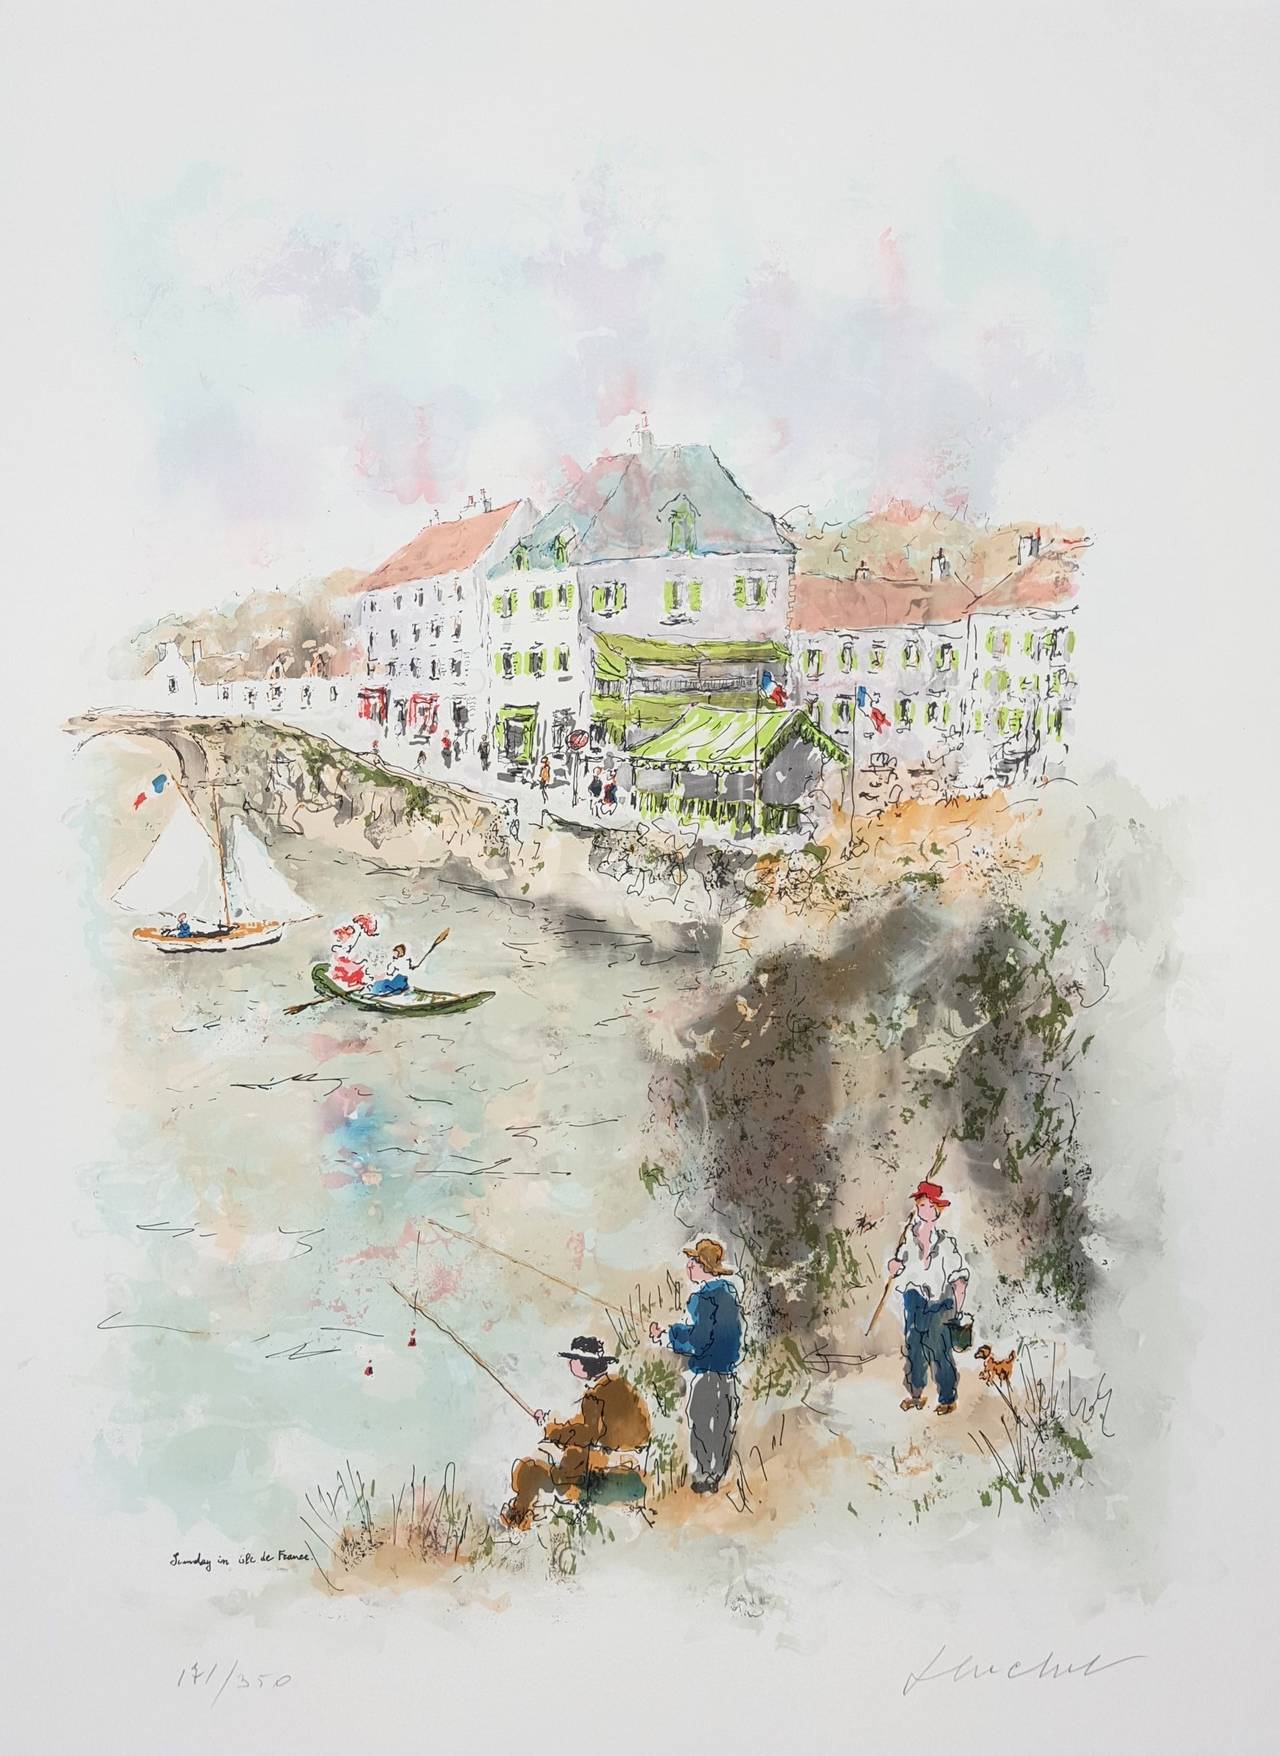 Sunday in the Isle de France /// Contemporary City Street Scene River People Art - Print by Urbain Huchet